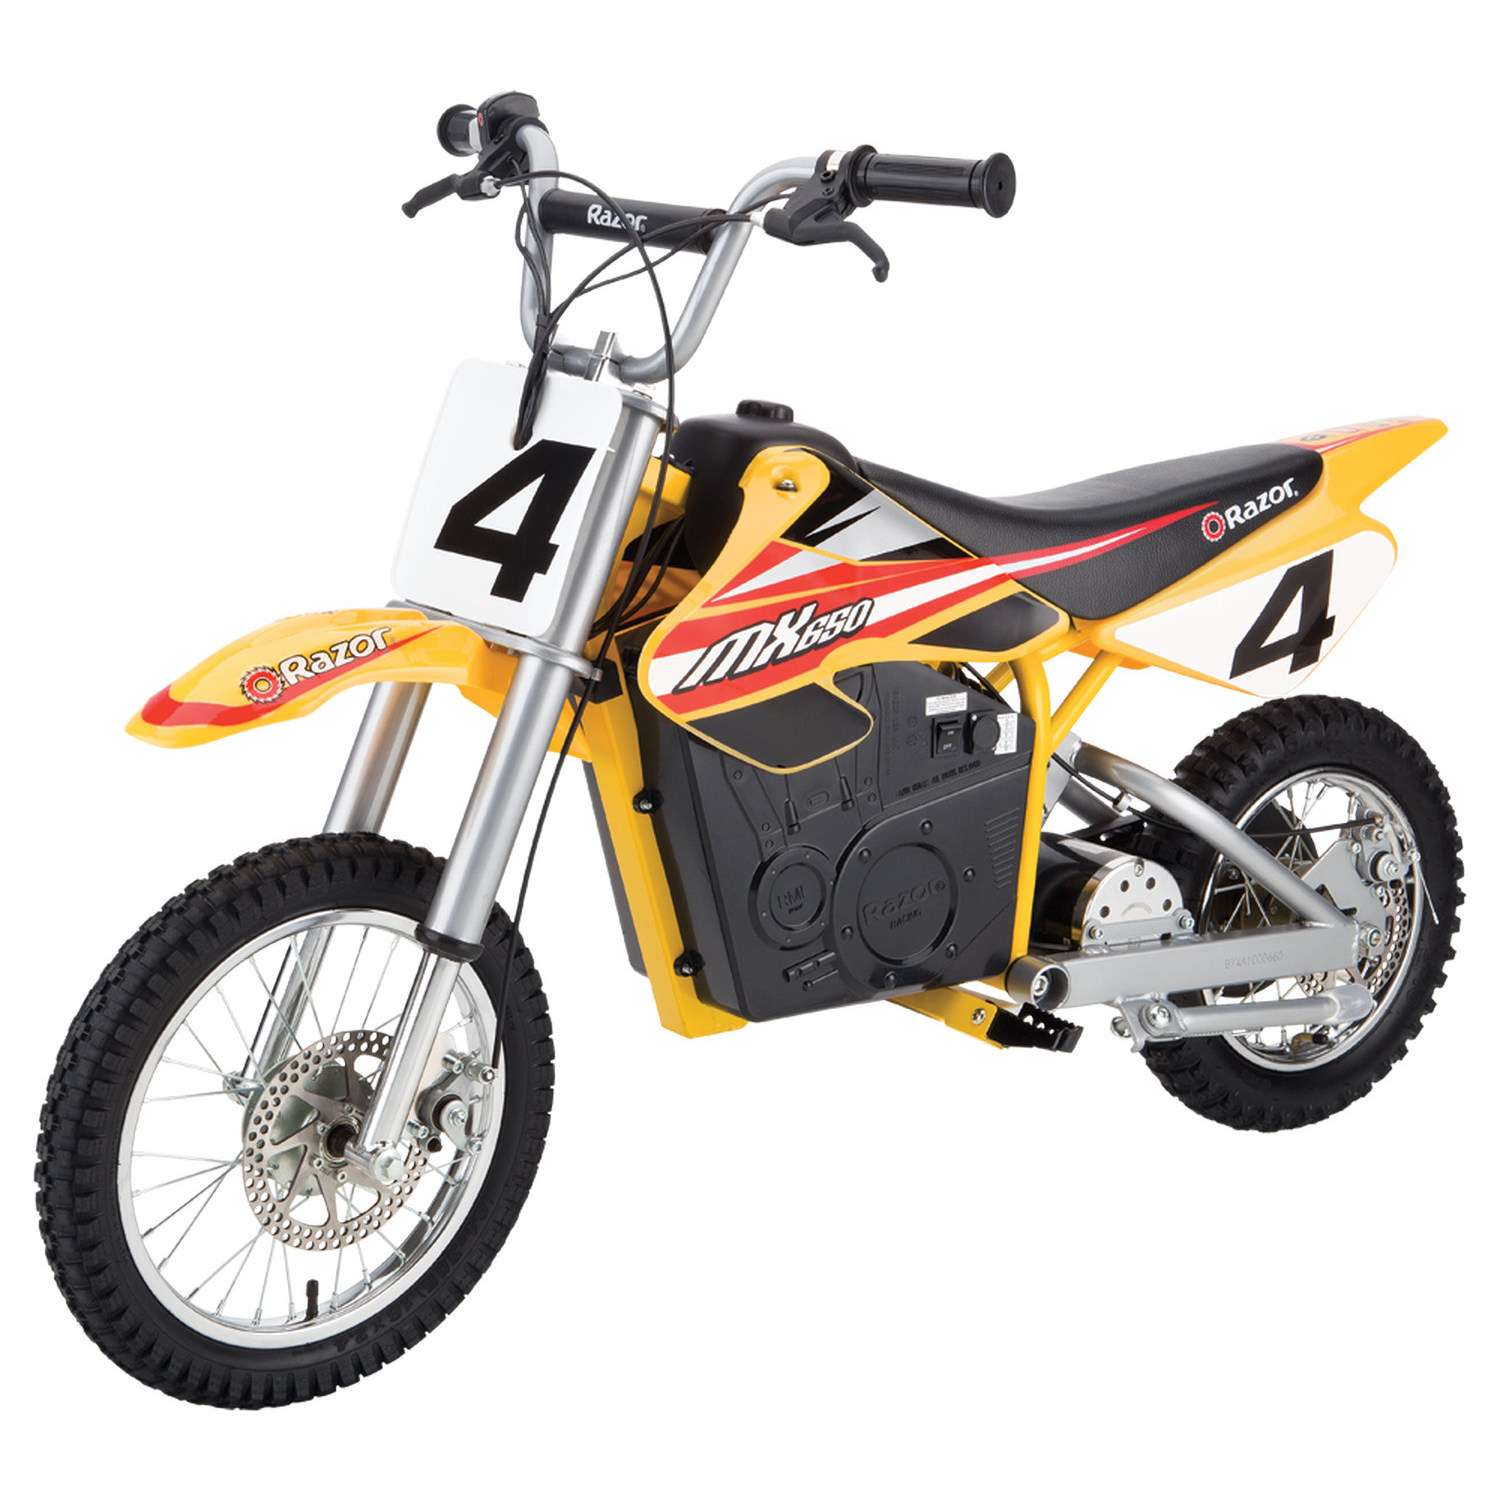 Электромотоцикл для детей RAZOR MX650 жёлтый с амортизаторами для бездорожья - фото 4